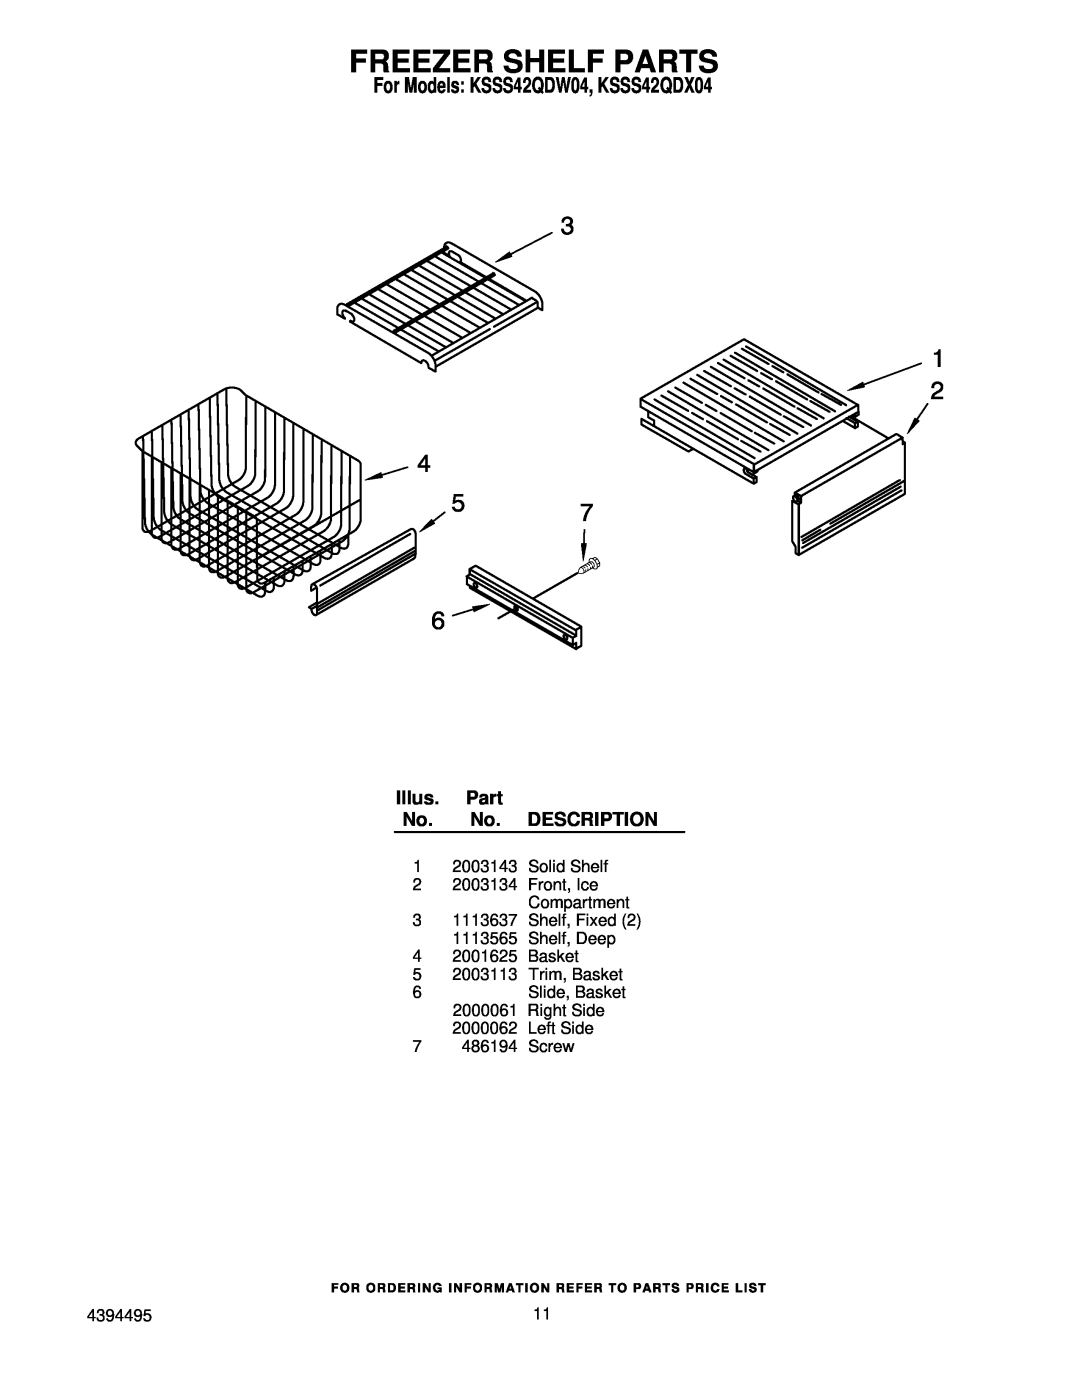 KitchenAid manual Freezer Shelf Parts, For Models KSSS42QDW04, KSSS42QDX04, Illus. Part No. No. DESCRIPTION 